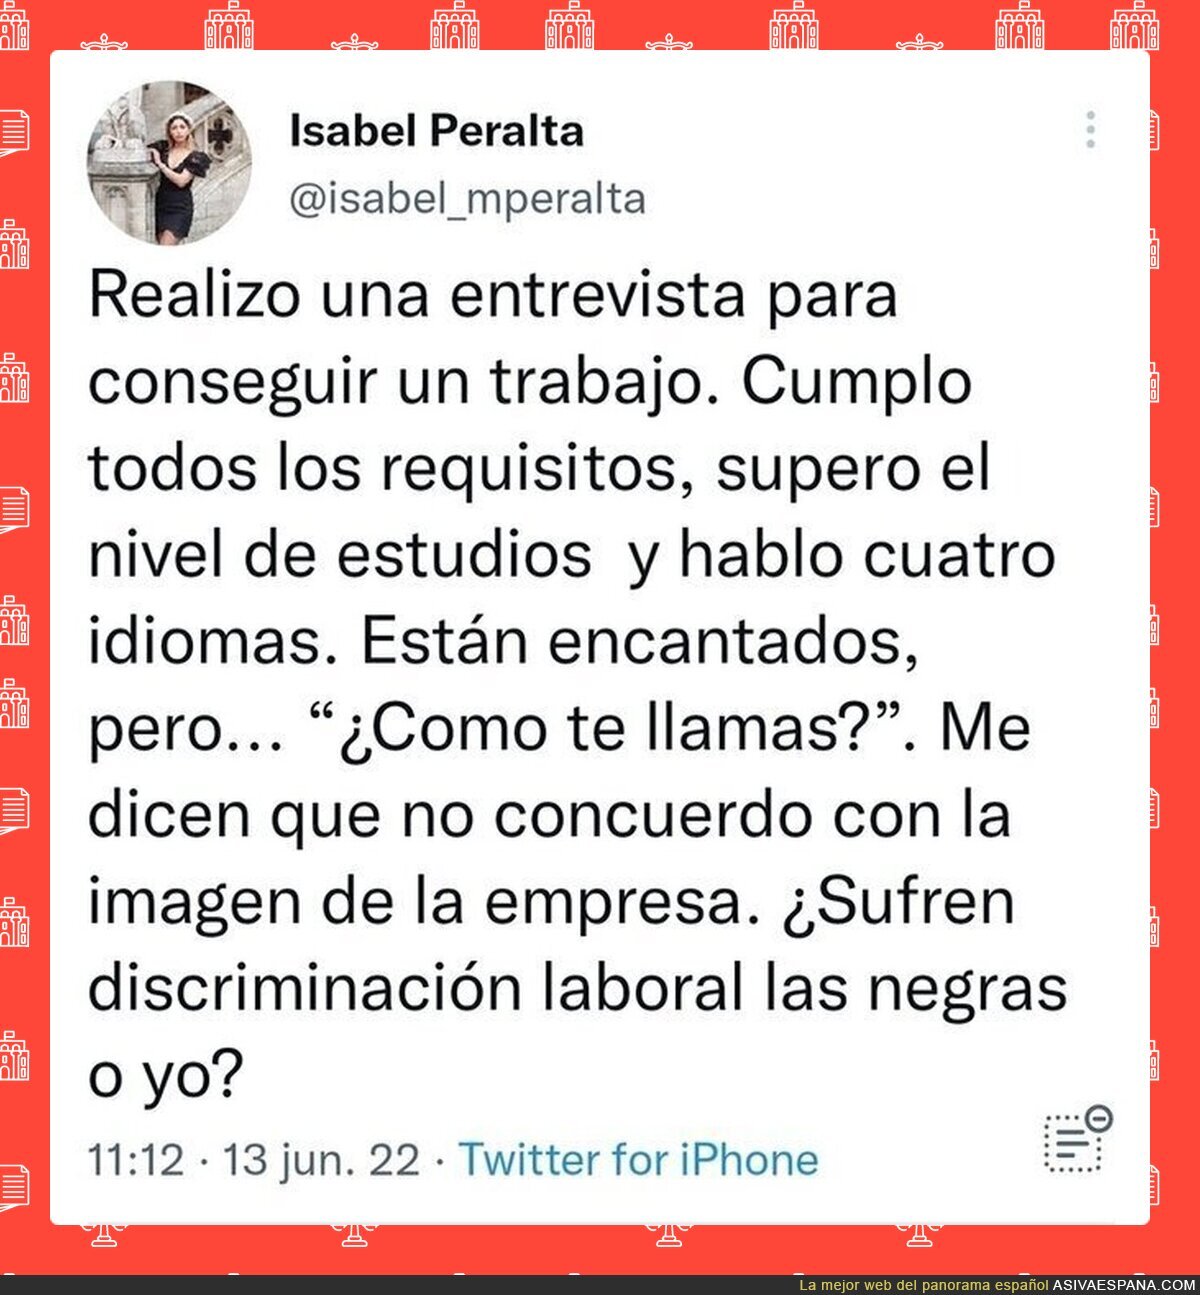 La discriminación a la nazi de Isabel Peralta